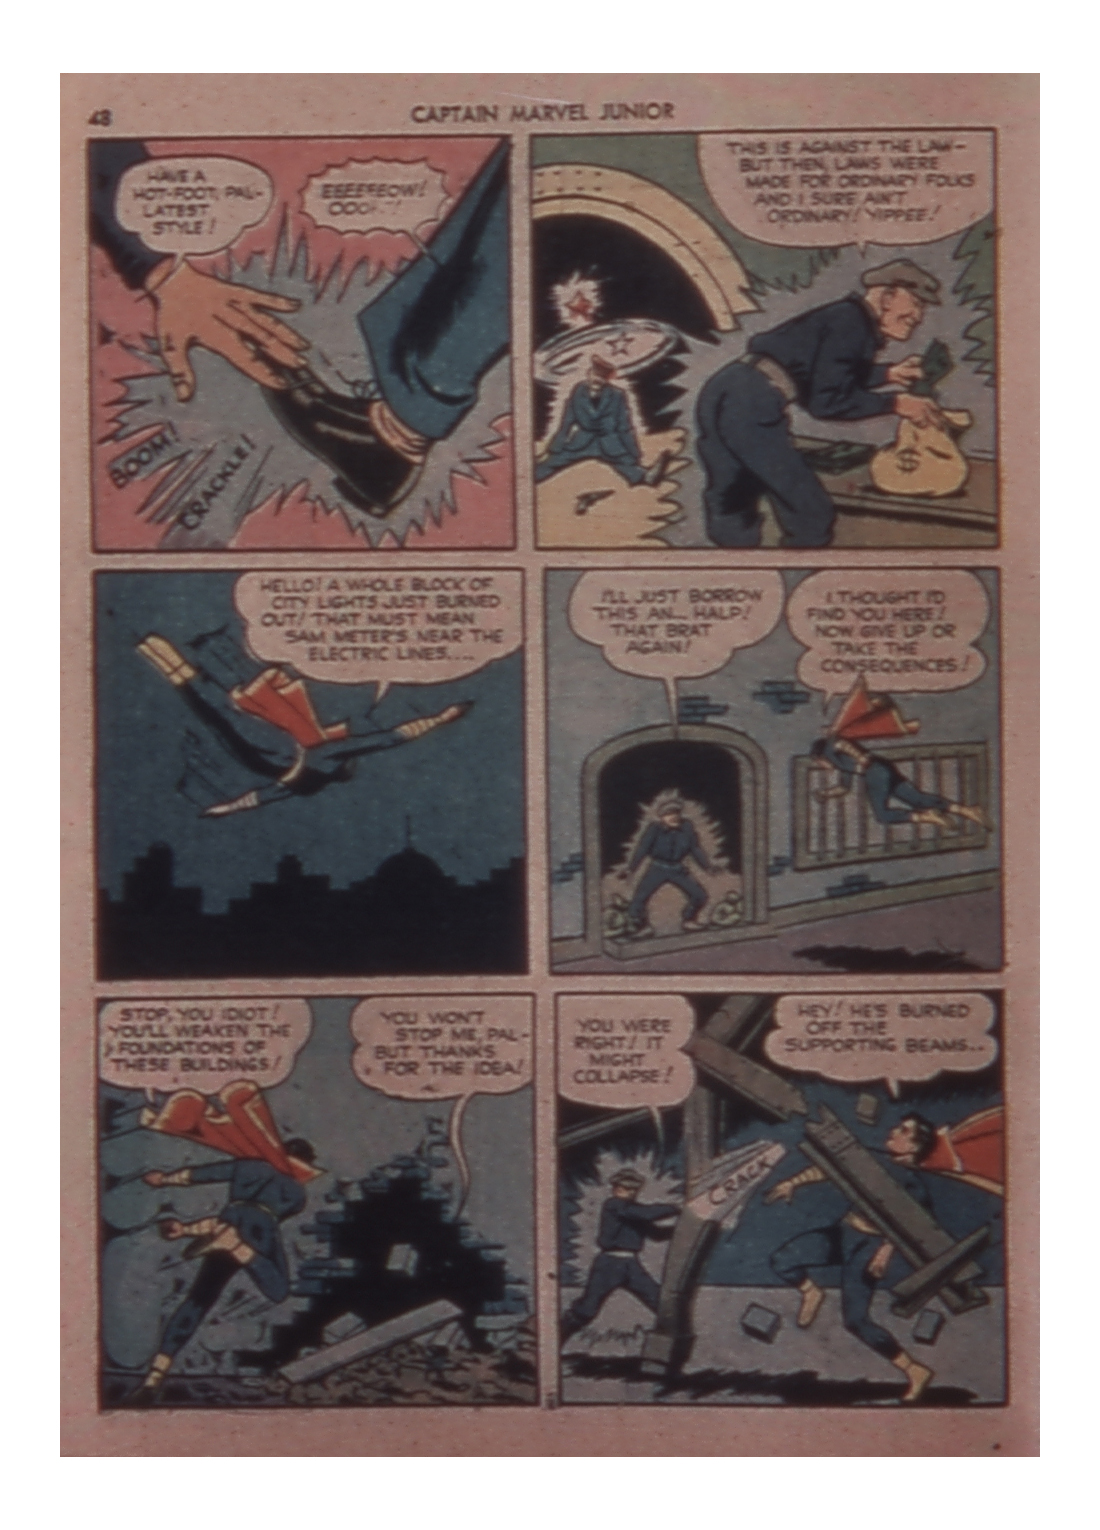 Read online Captain Marvel, Jr. comic -  Issue #7 - 48